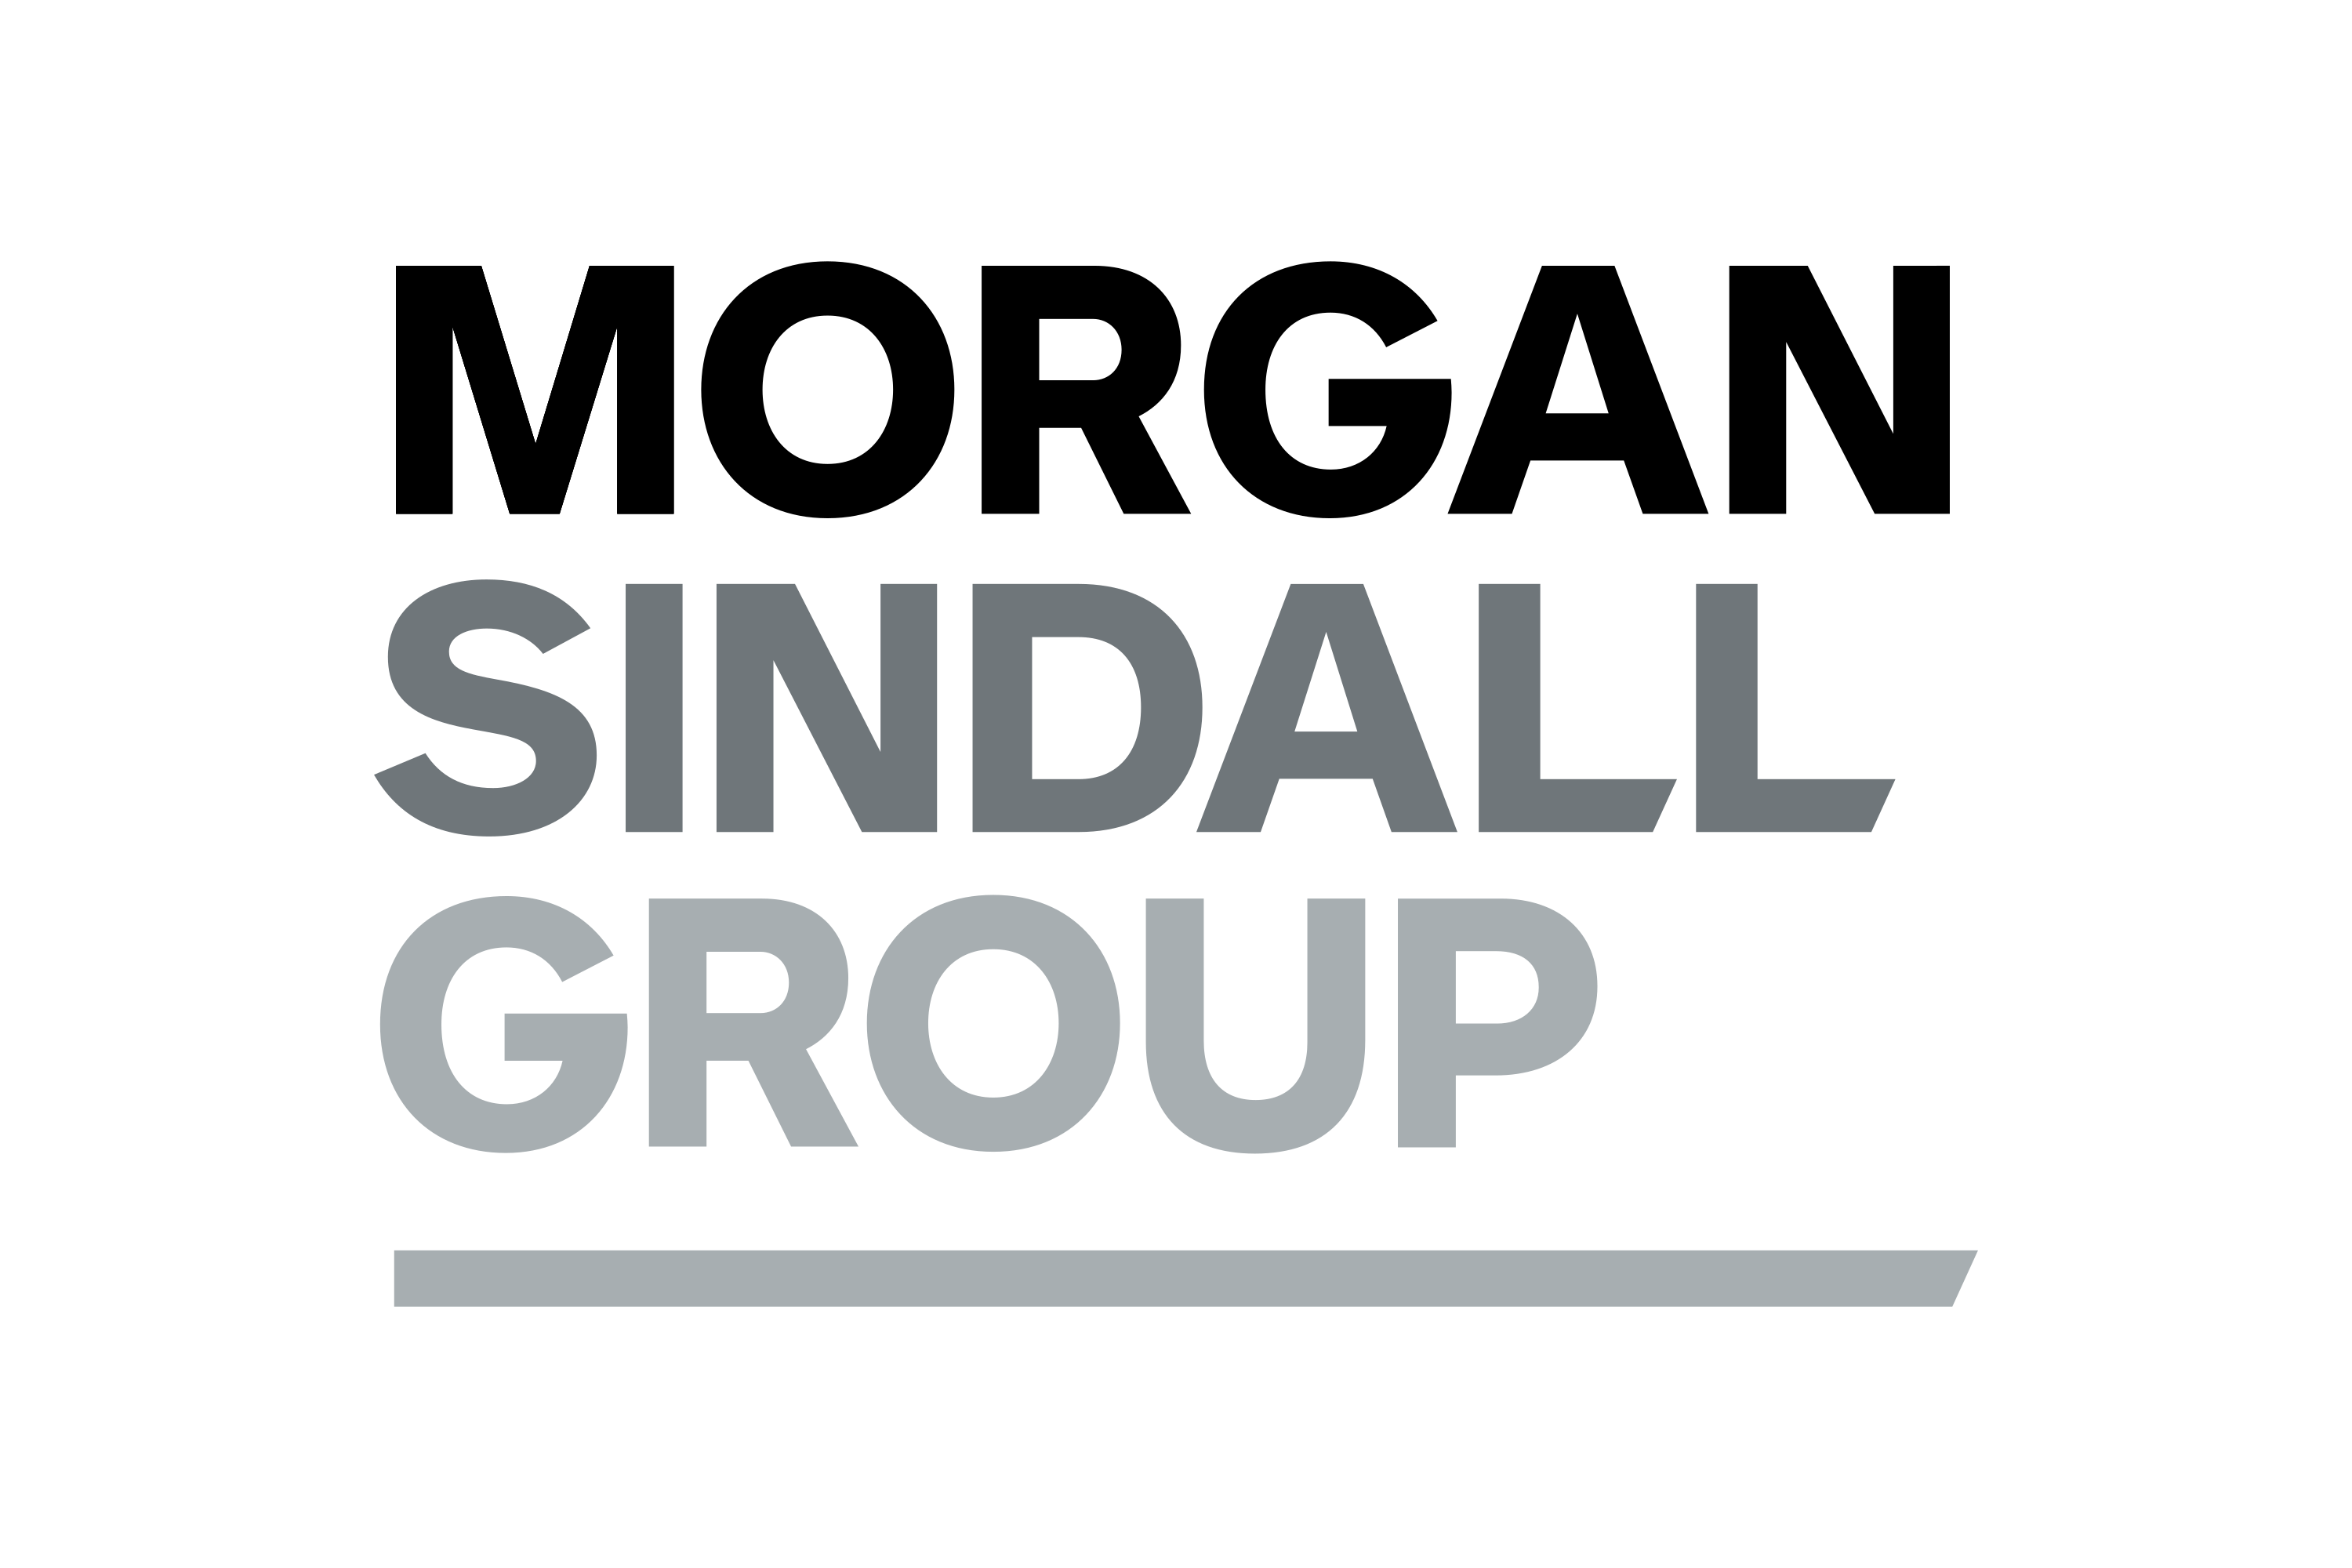 Morgan Sindall Group Logo